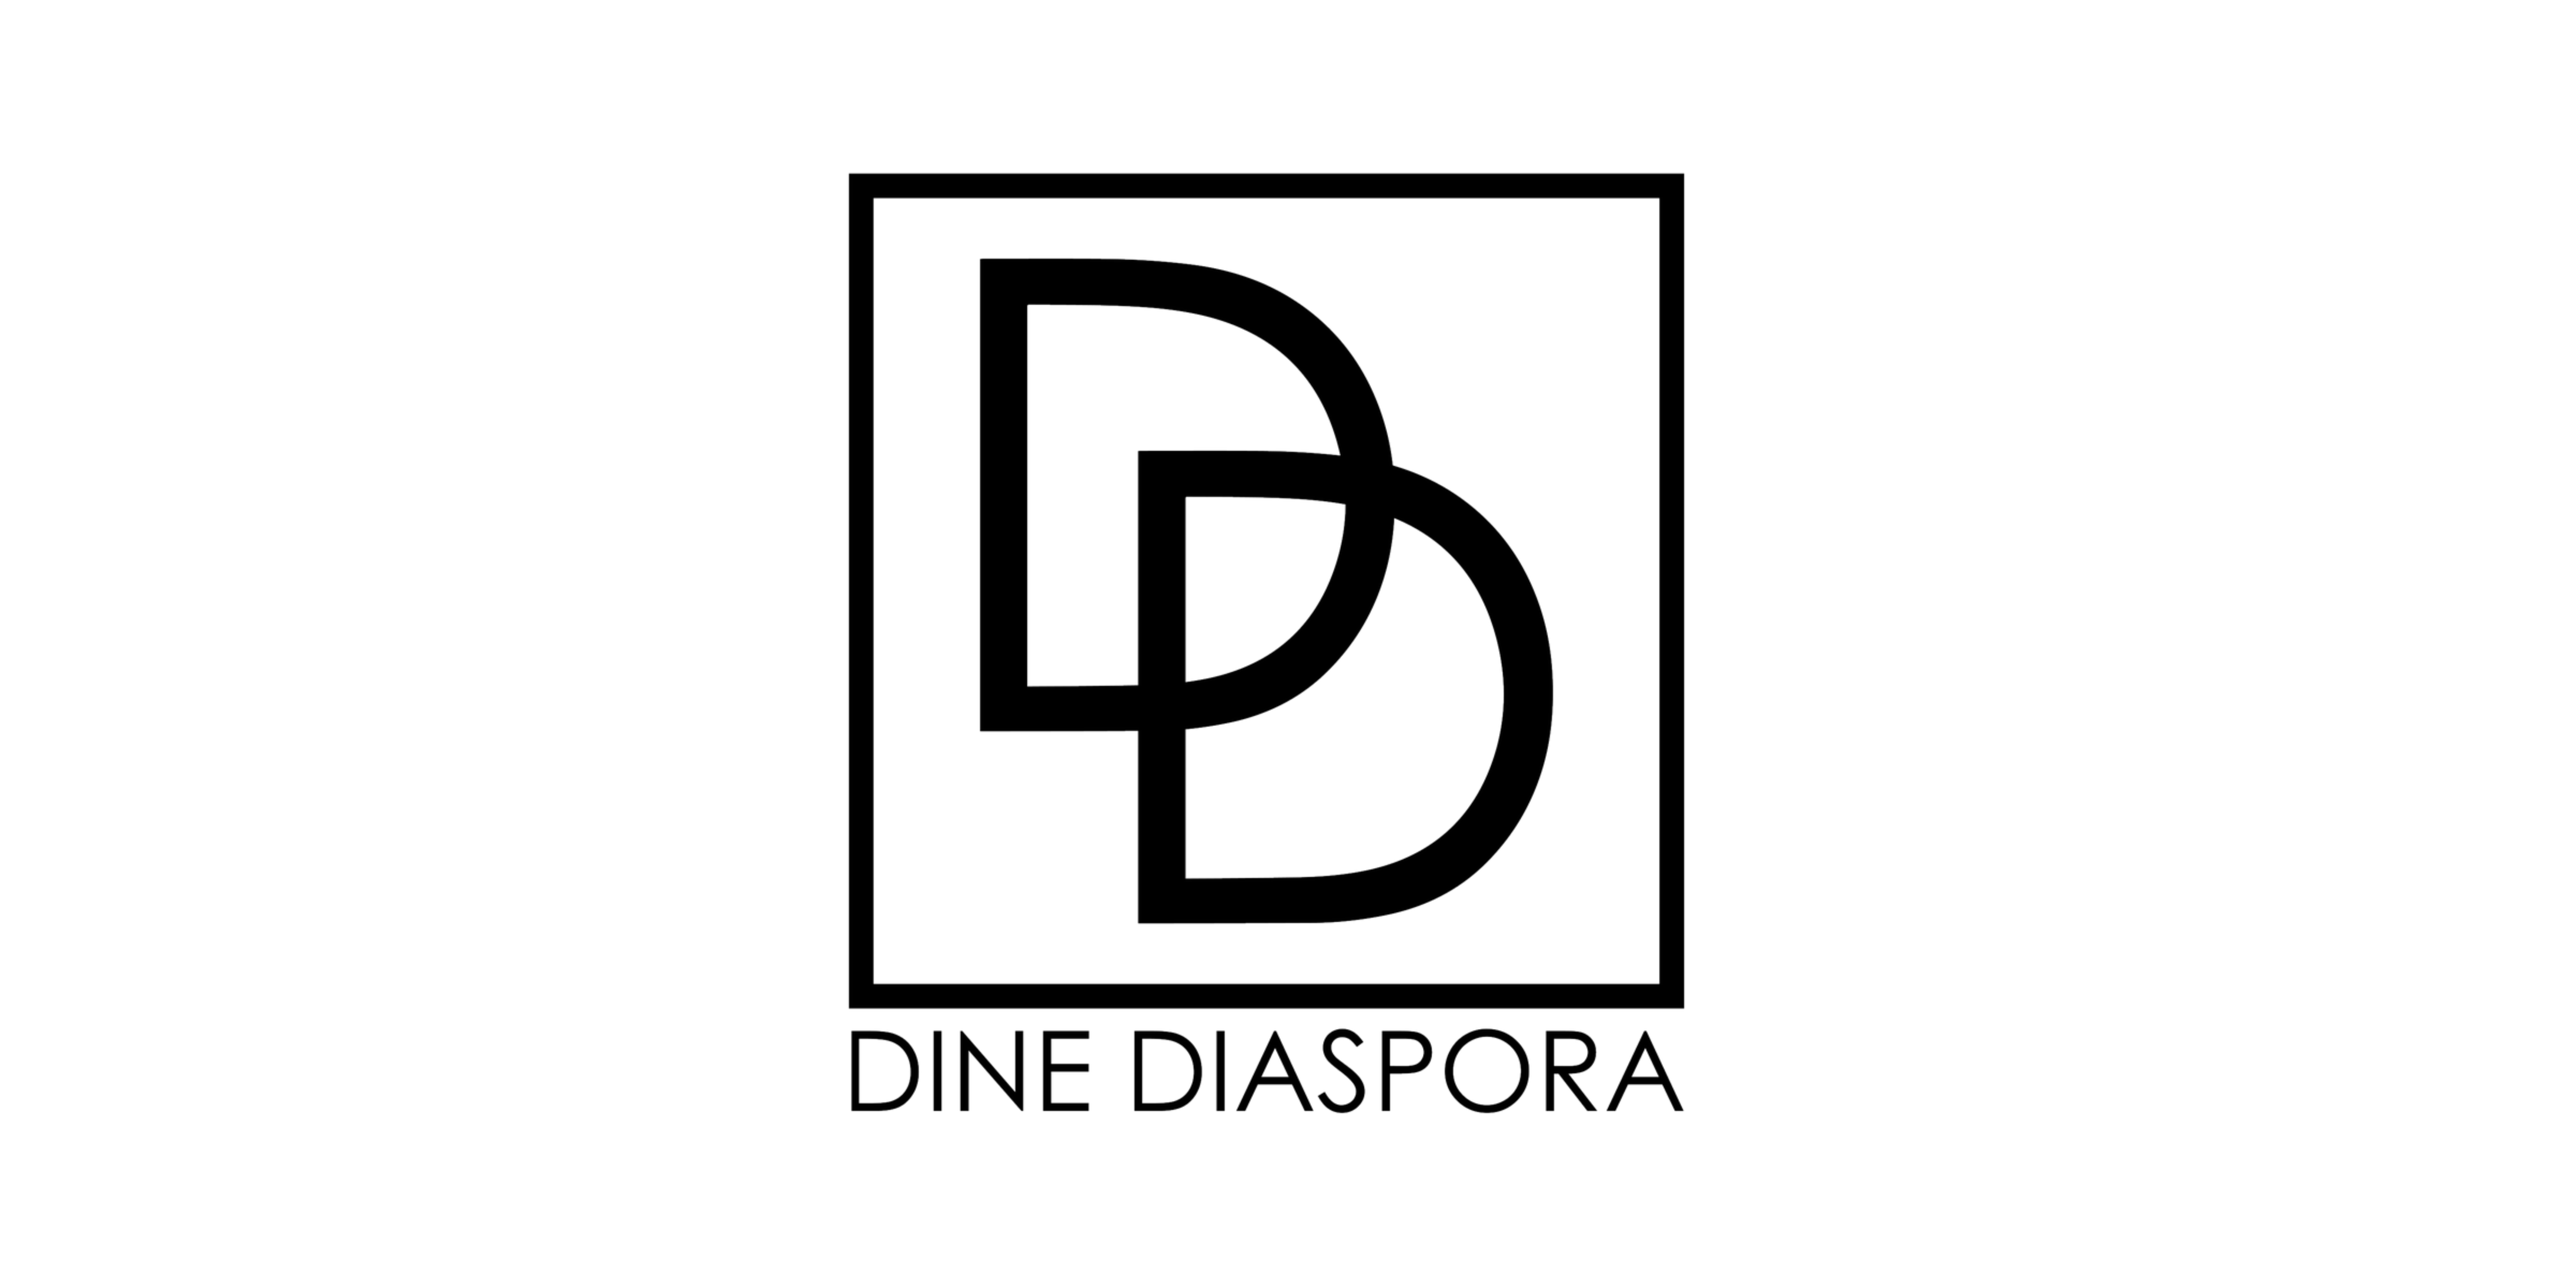 Dine Diaspora presents 5th Annual "Black Women in Food" Awards